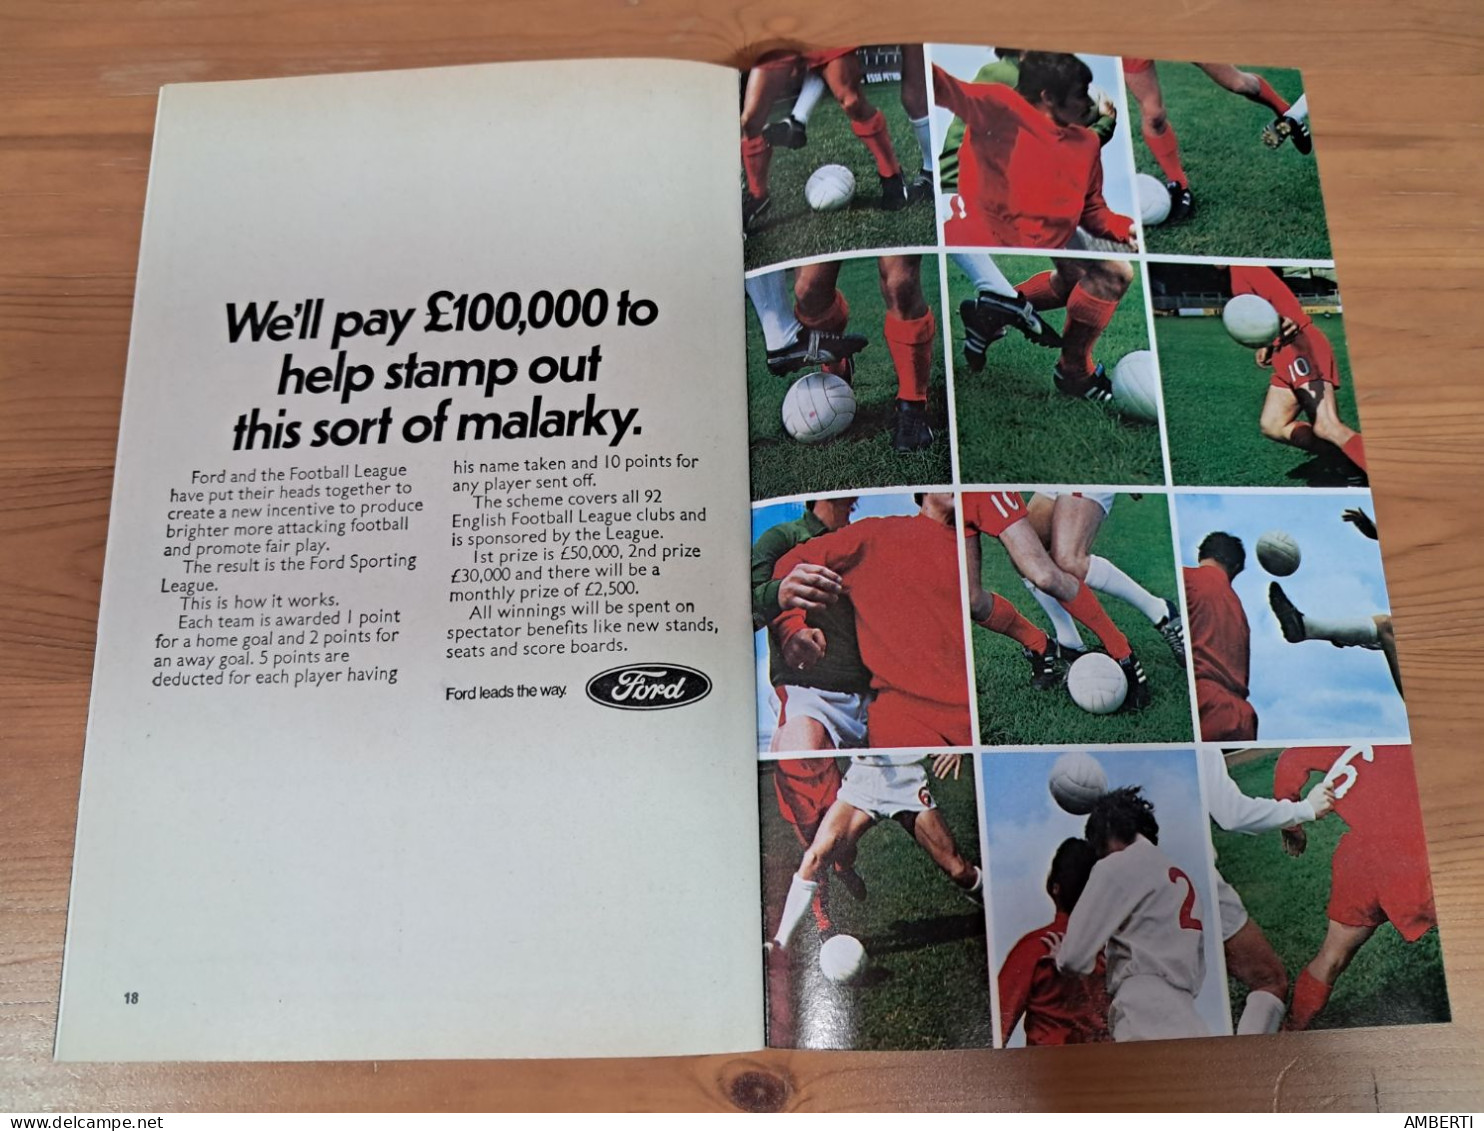 Football League Review poster Tottenham 1970/71